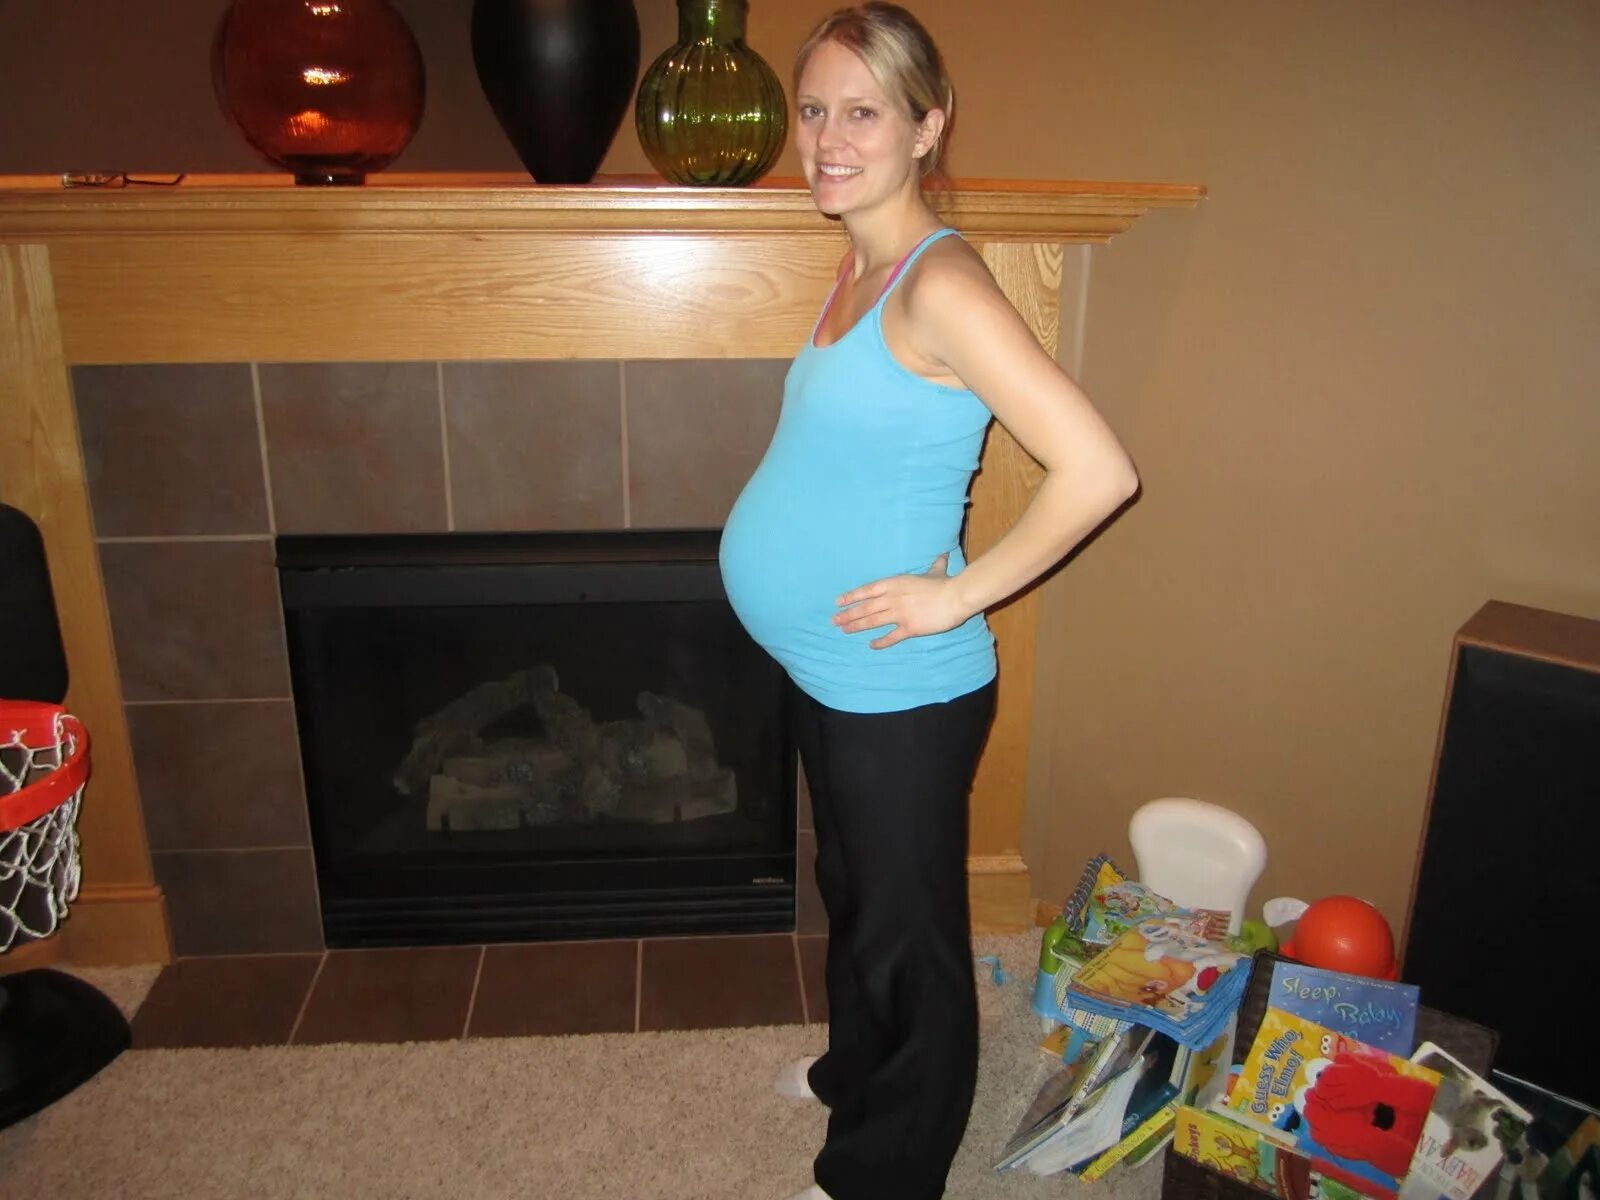 Preggo Deline 8 months. 7th month of pregnancy. Забеременела в 8